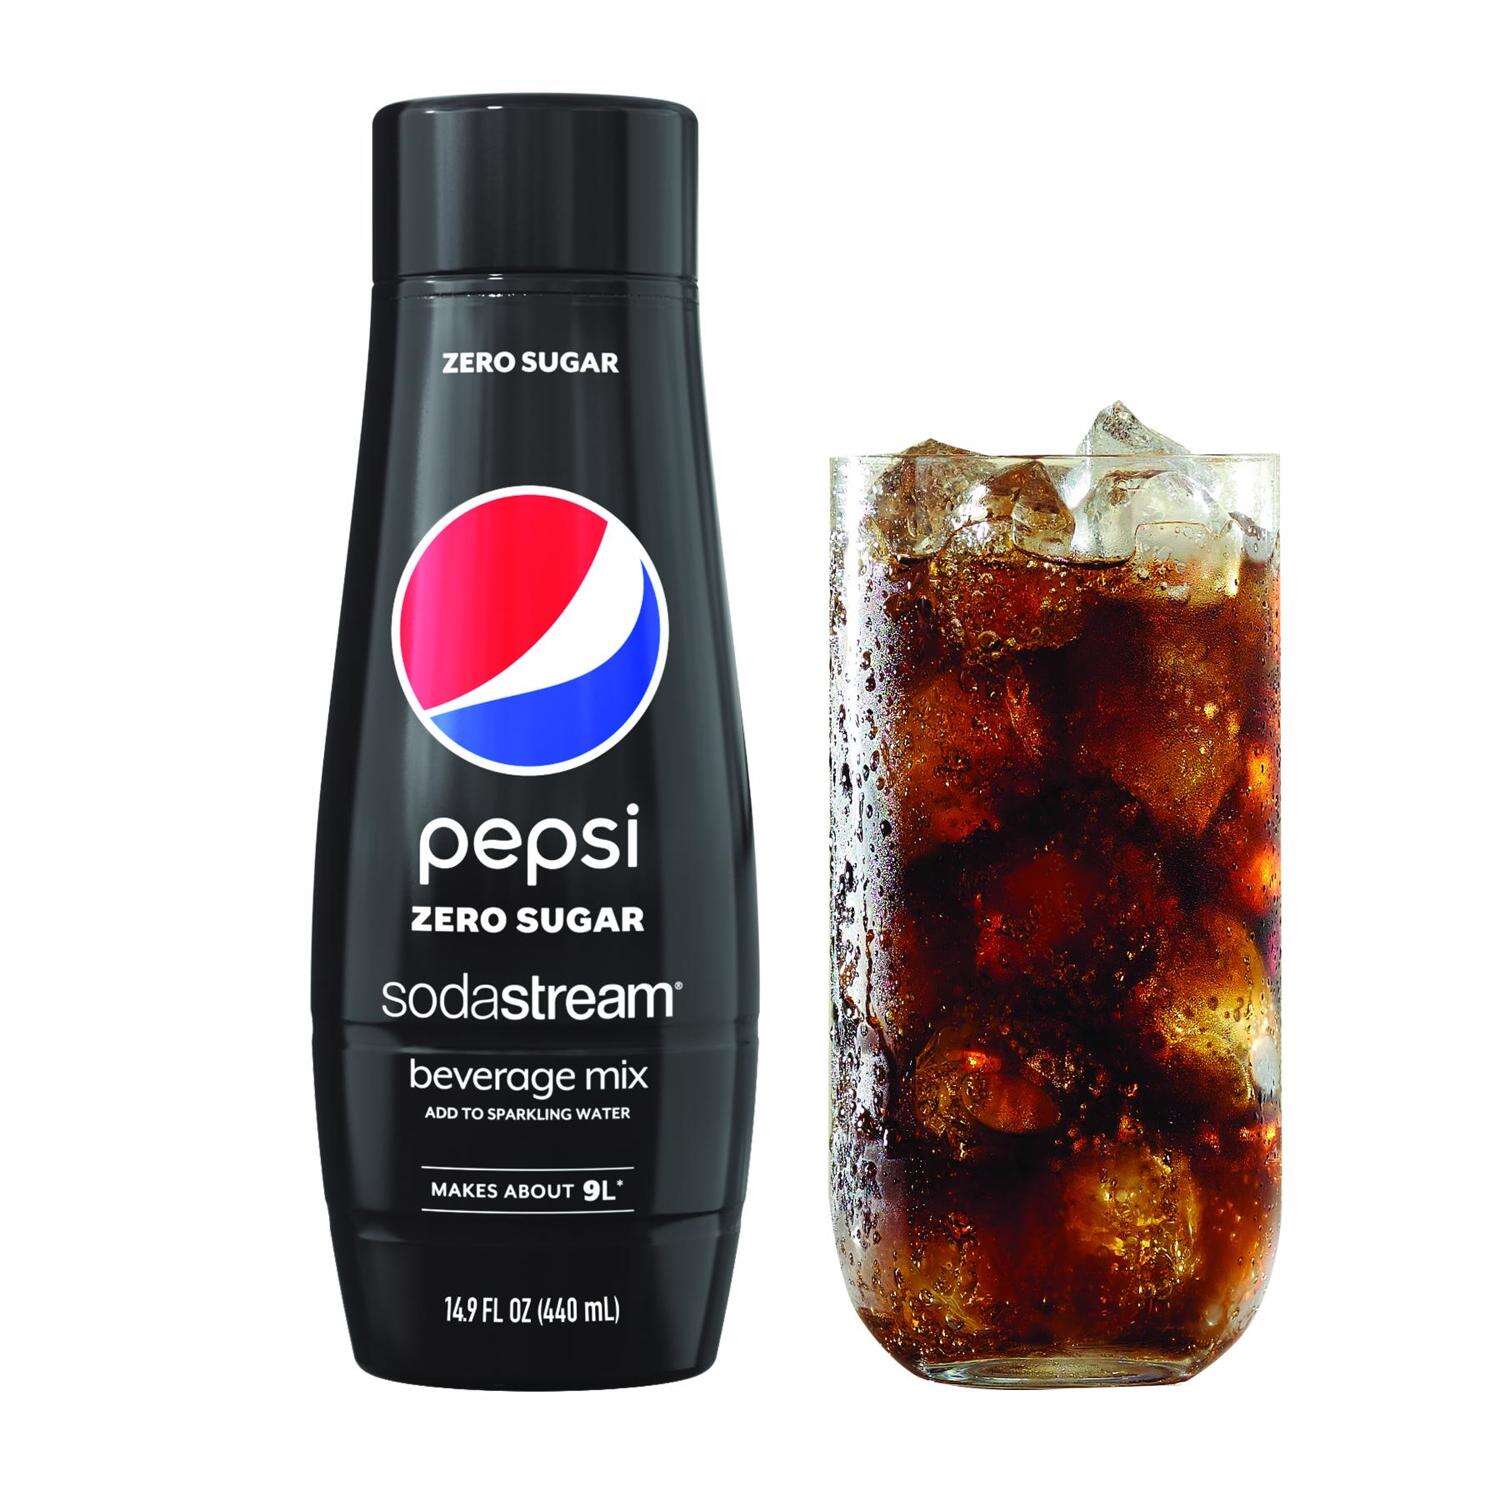 munching mesterværk Aja SodaStream Zero Sugar Pepsi Soda Mix 440 ml 1 pk - Ace Hardware